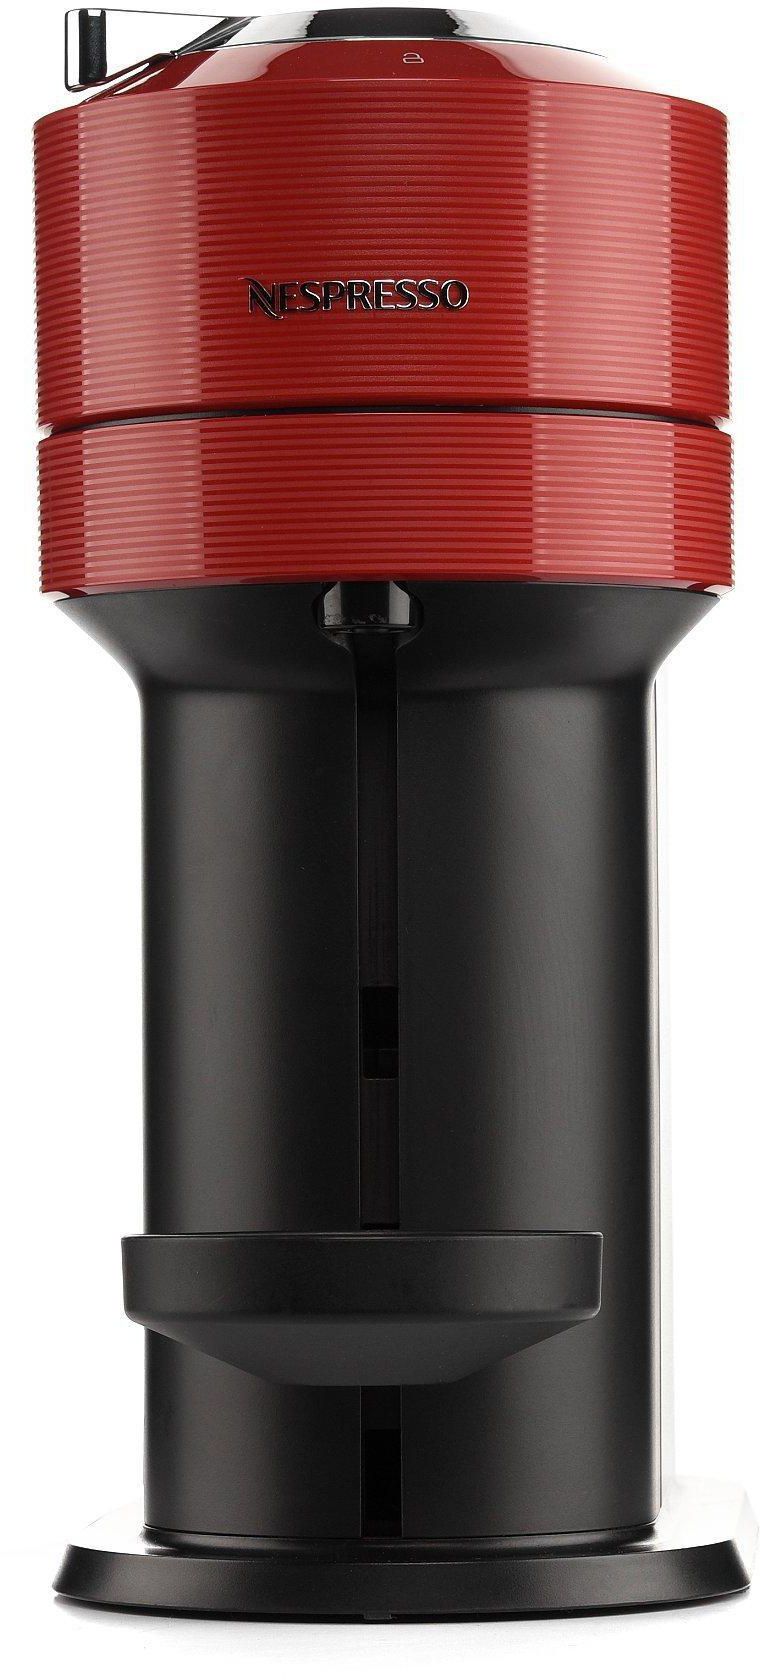 Nespresso Coffee Machine, Red